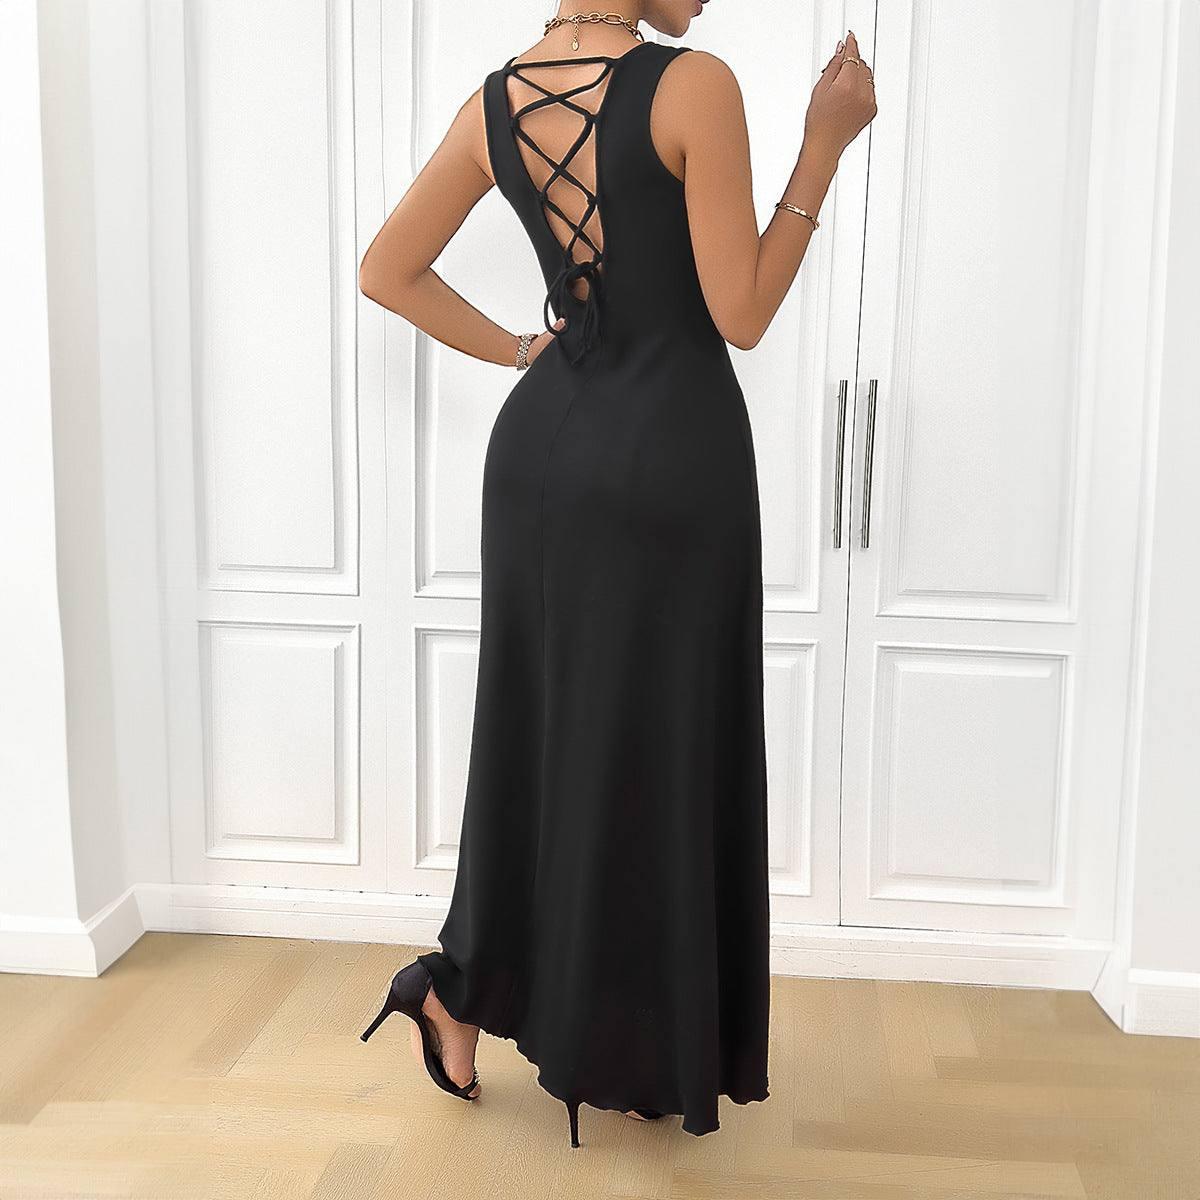 Women's Fashion Elegant Solid Color Sleeveless Dress-Black-2